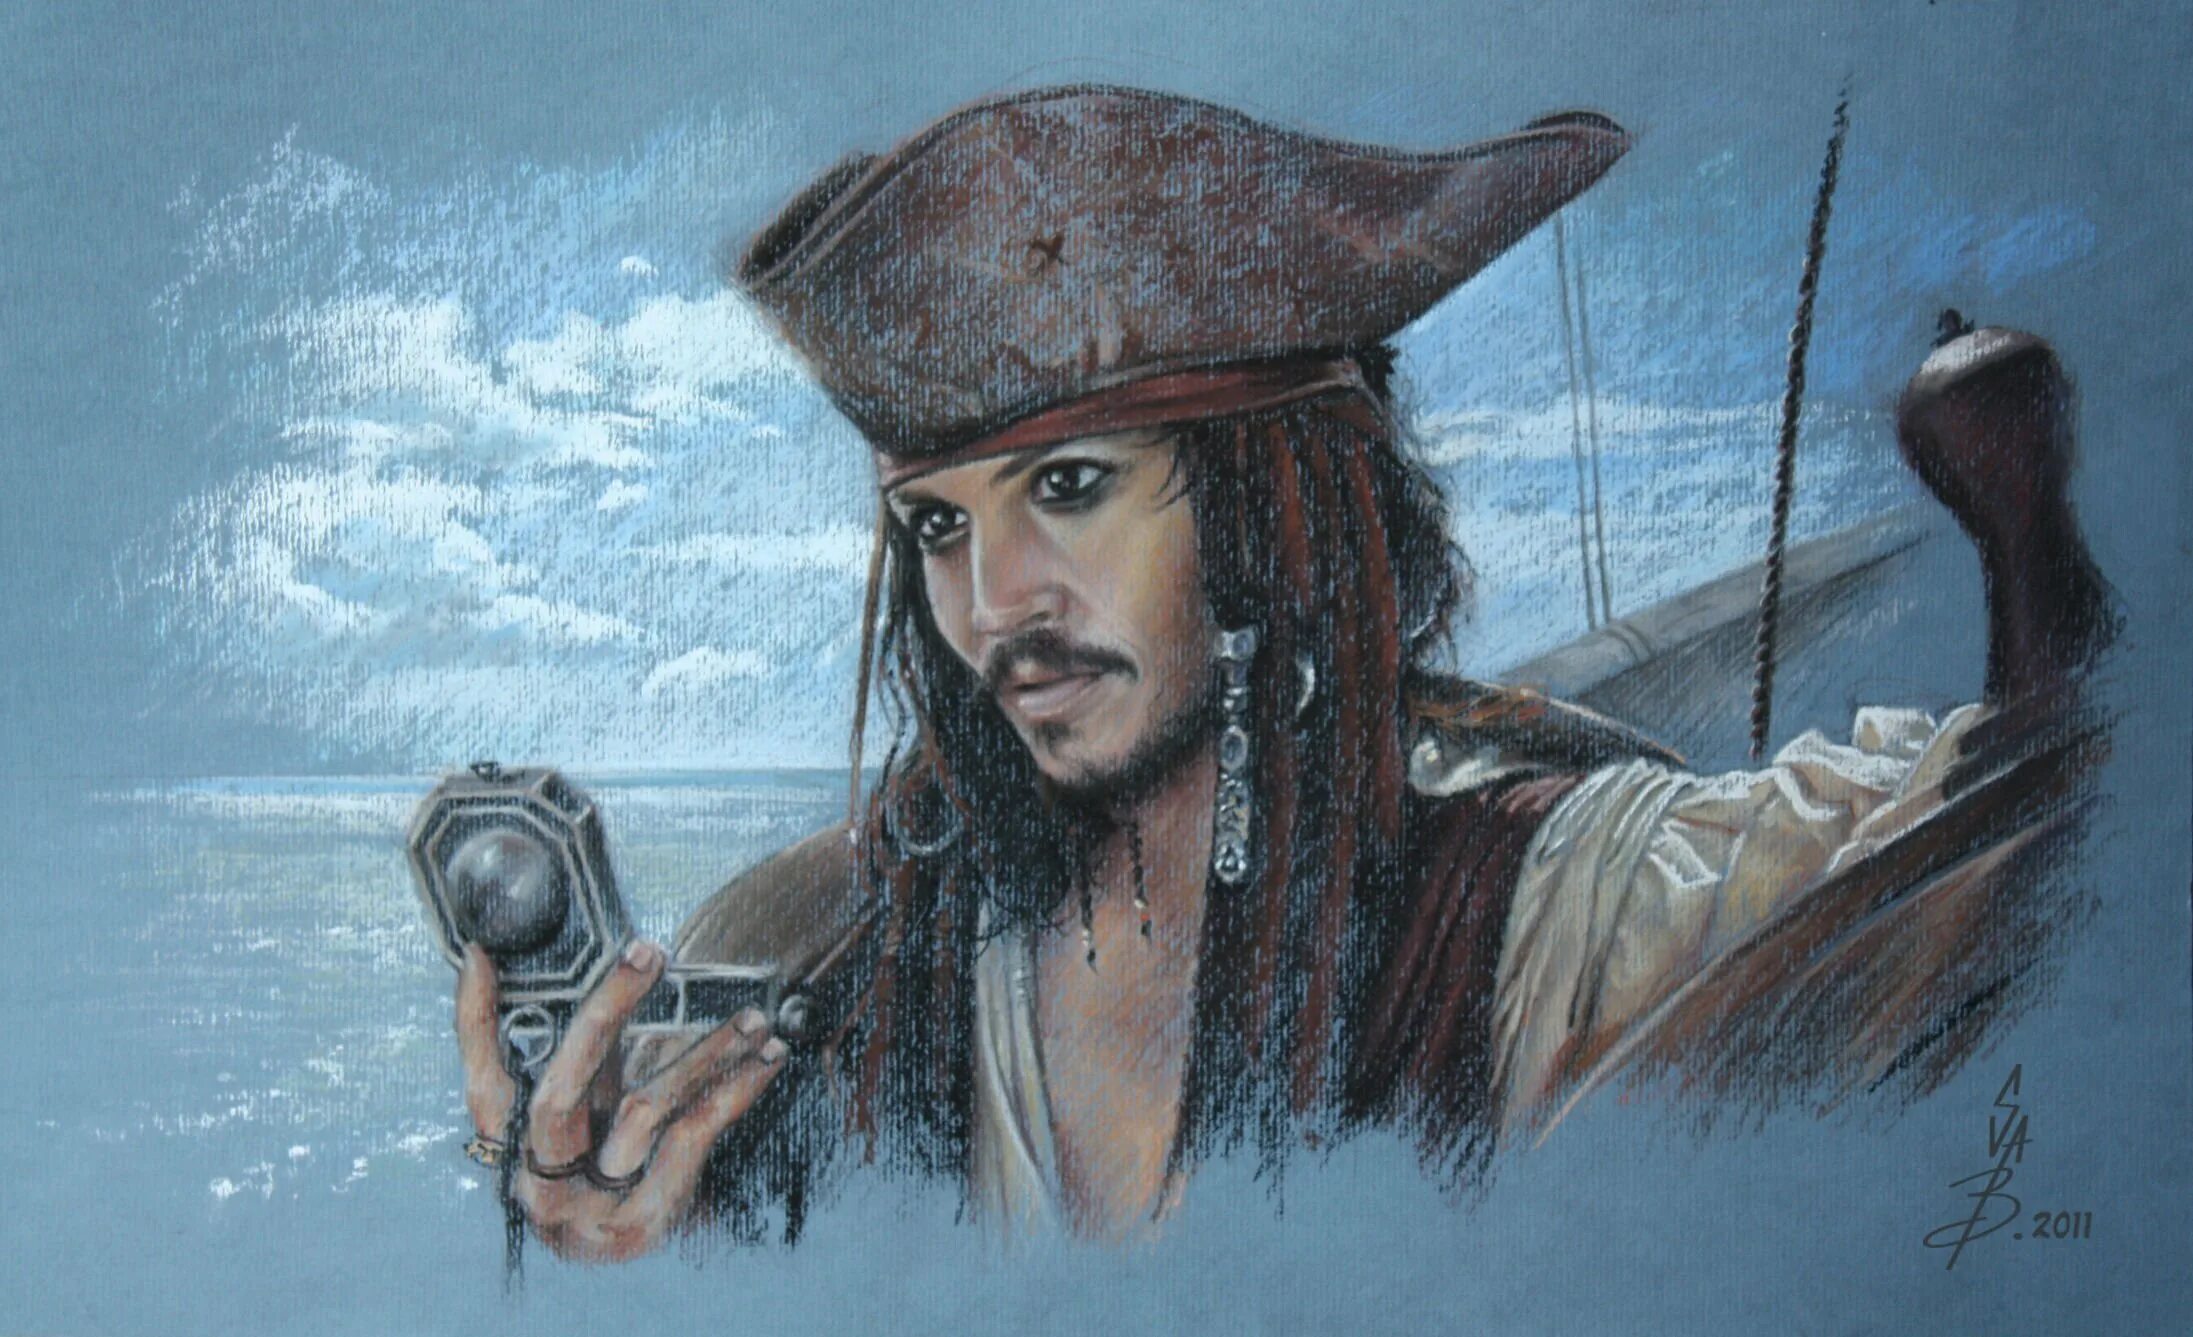 Капитан Джек Воробей черная Жемчужина. Капитан Джек Воробей на корабле. Пират корибеисинго моря. Пираты Карибского моря проклятие черной Жемчужины Джек Воробей. Серега пират китаец